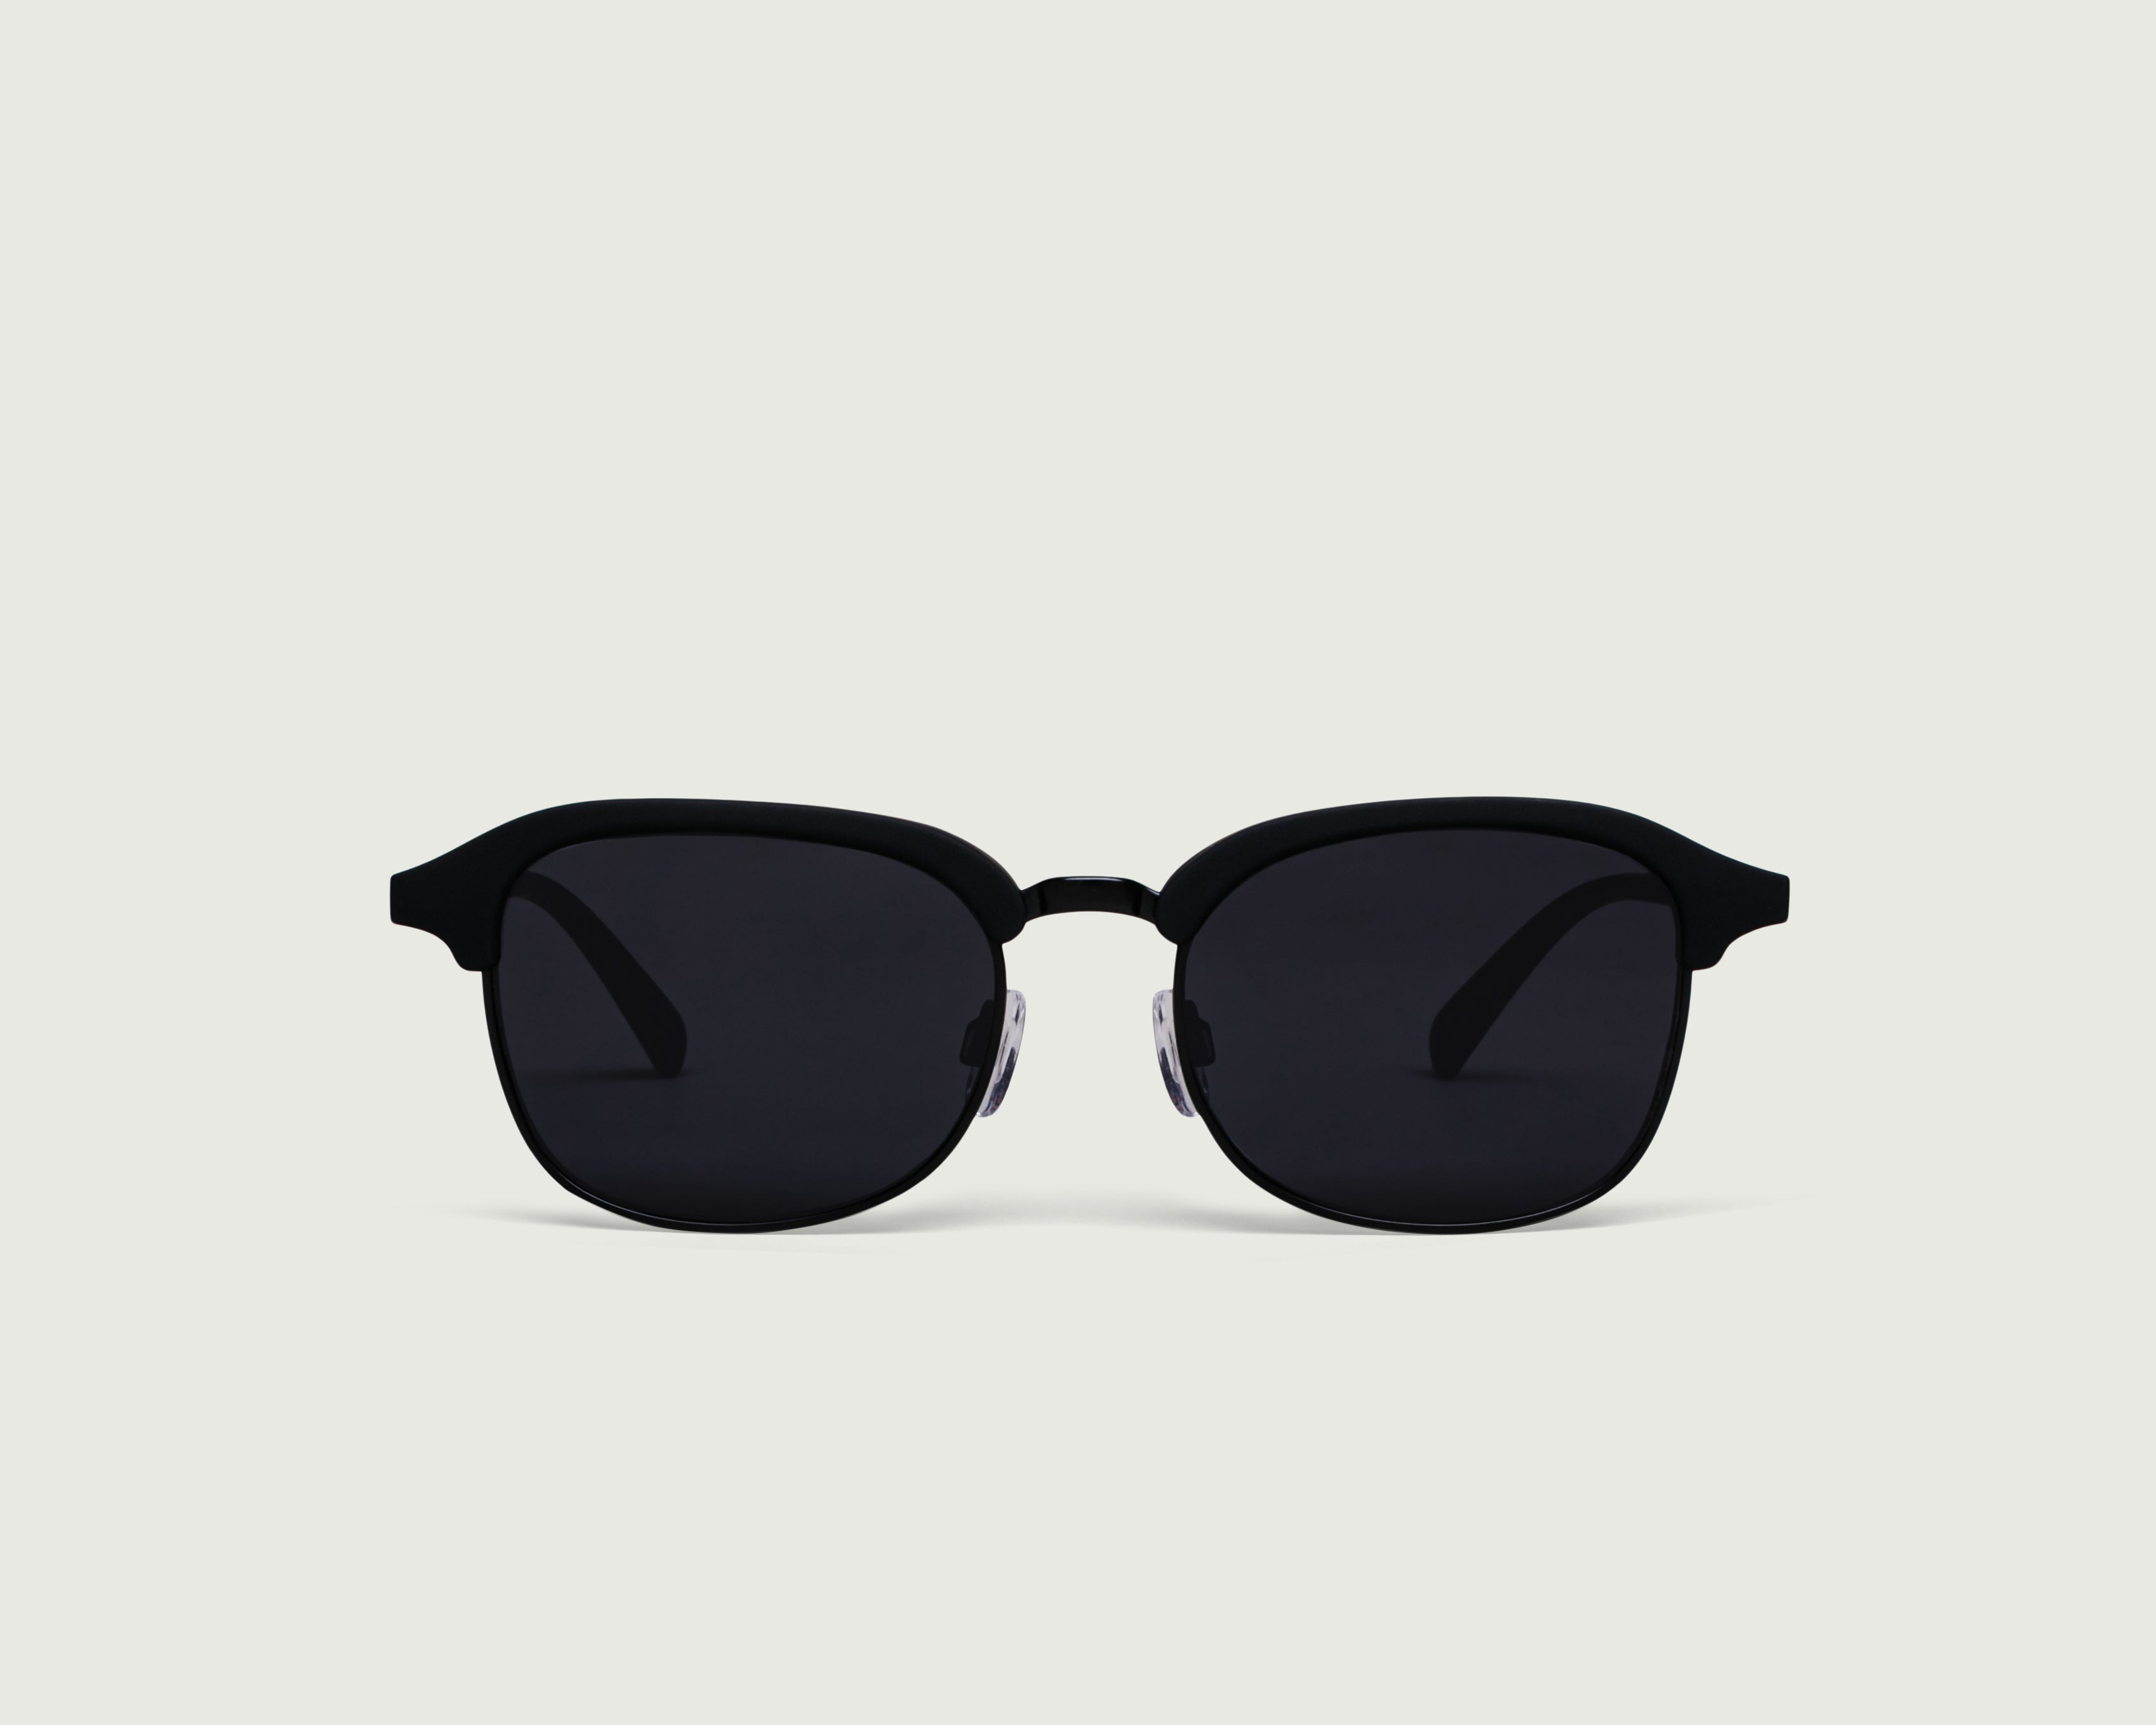 Ink::Castro Sunglasses browline black plastic metal front (4687761768502)